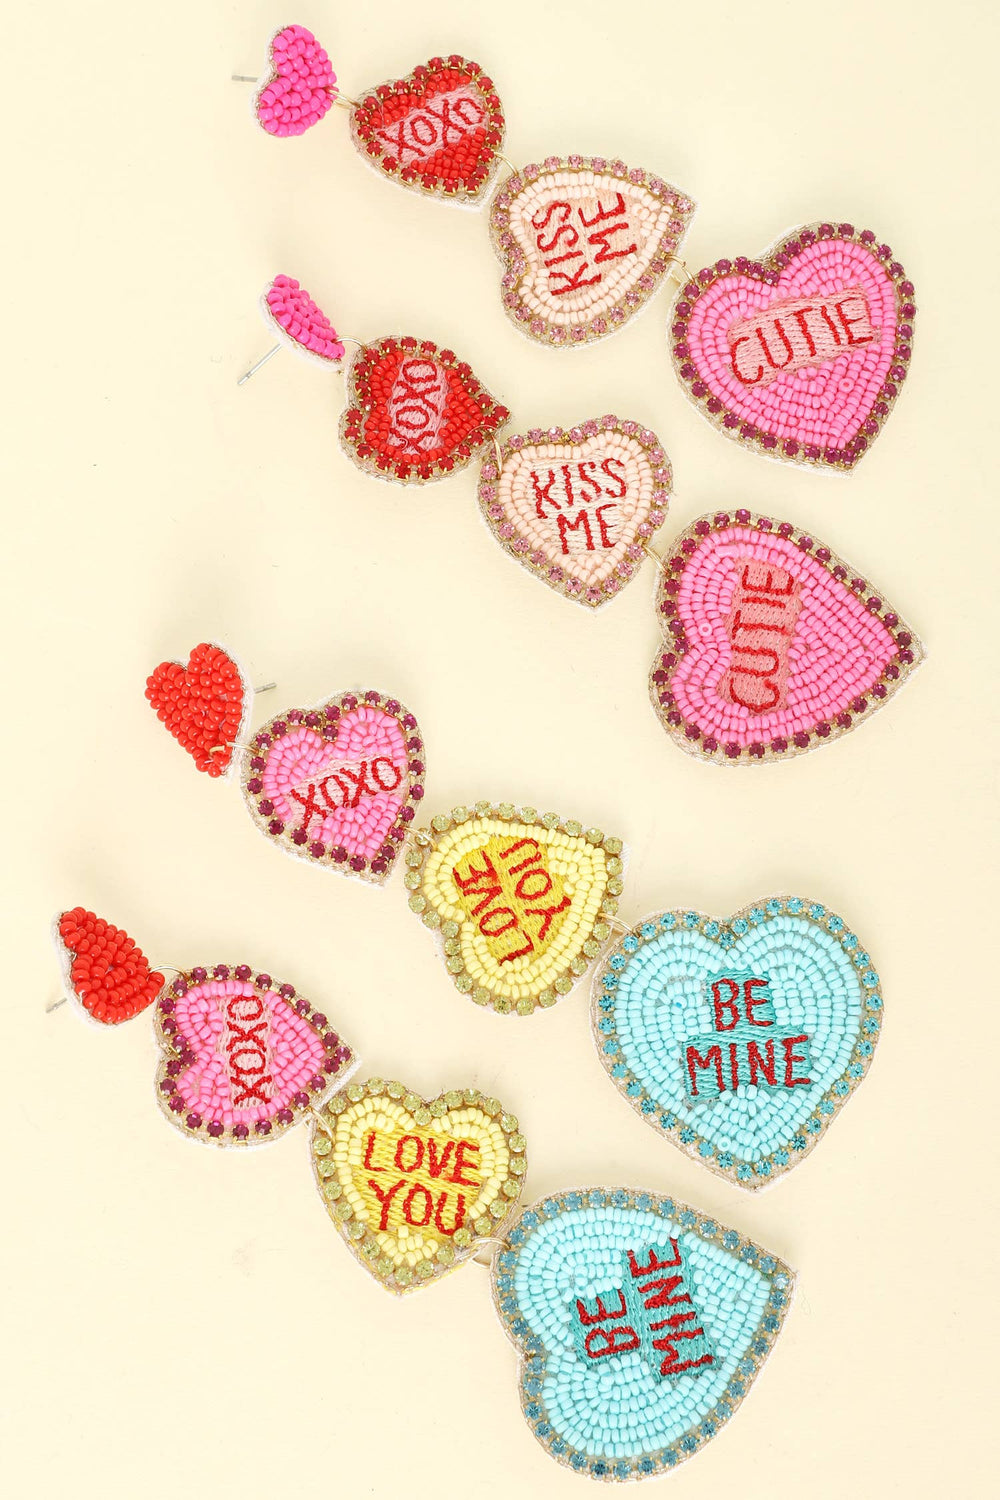 SP Sophia Collection Earrings XOXO Love You Be Mine Conversation Hearts Dangle Earrings: Pink